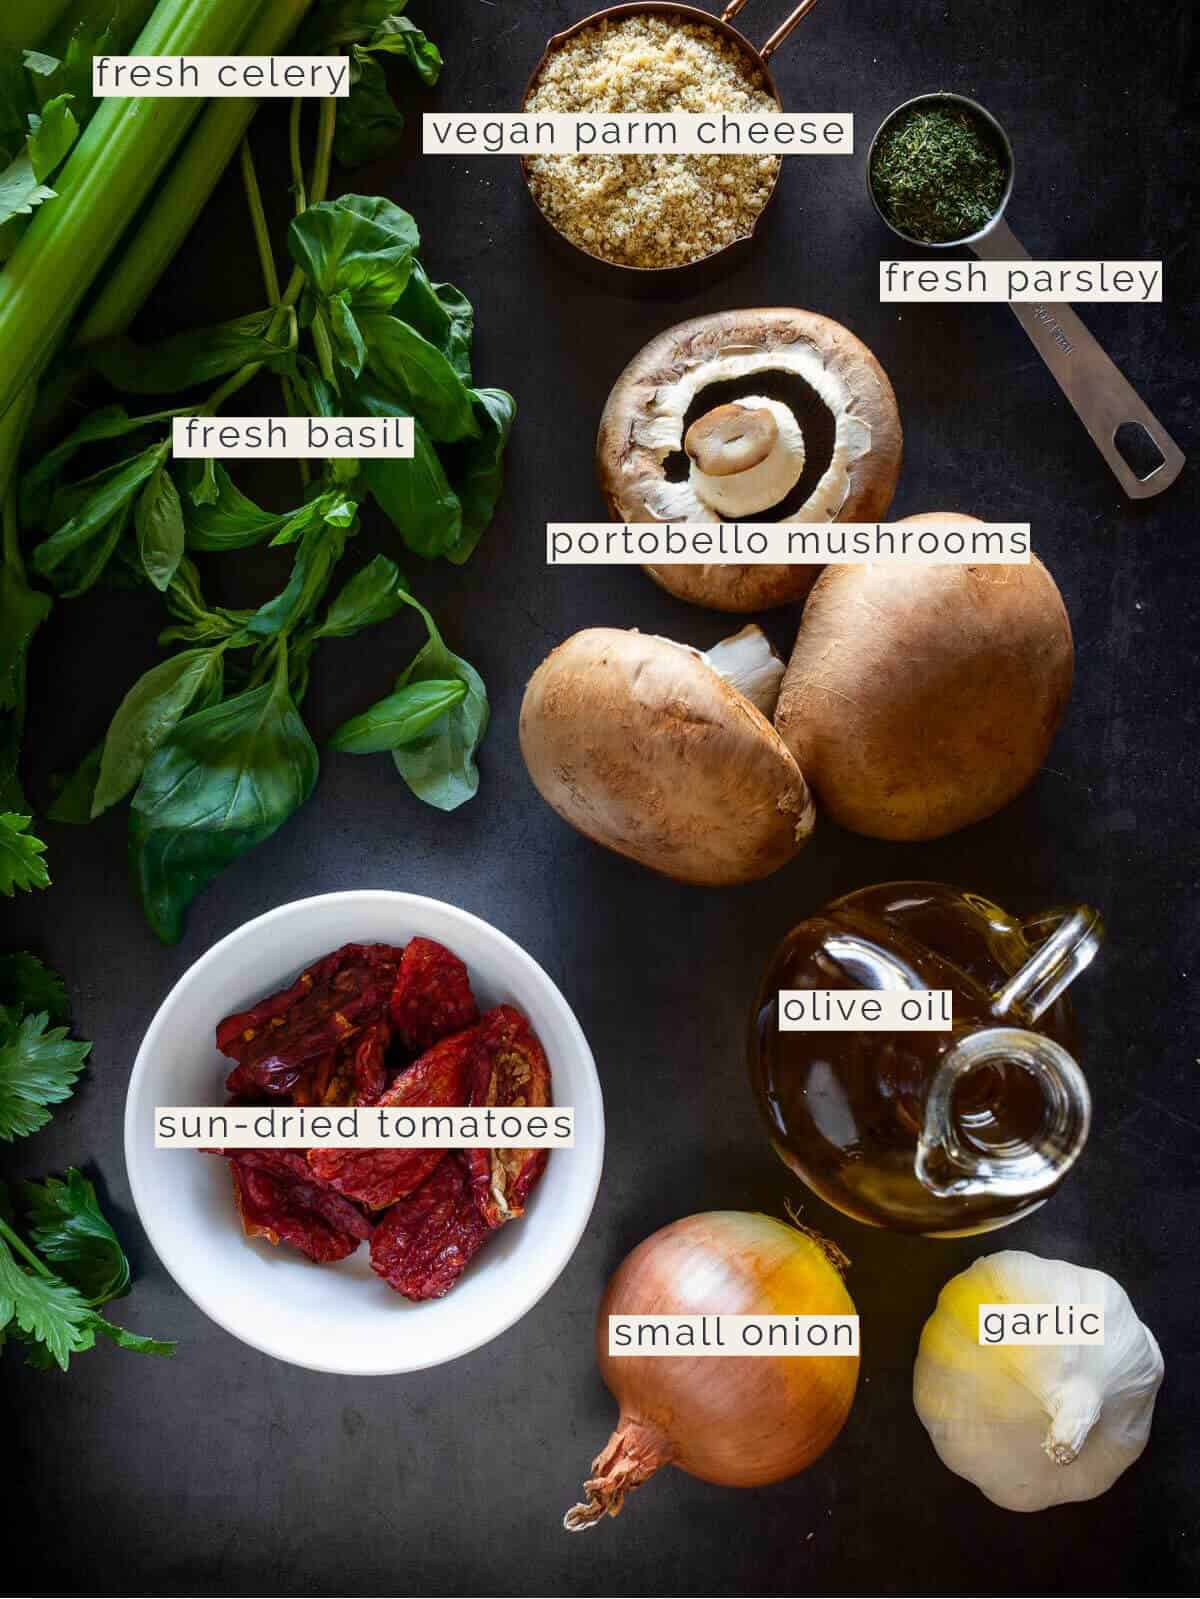 stuffed portobello mushrooms recipe ingredients shot